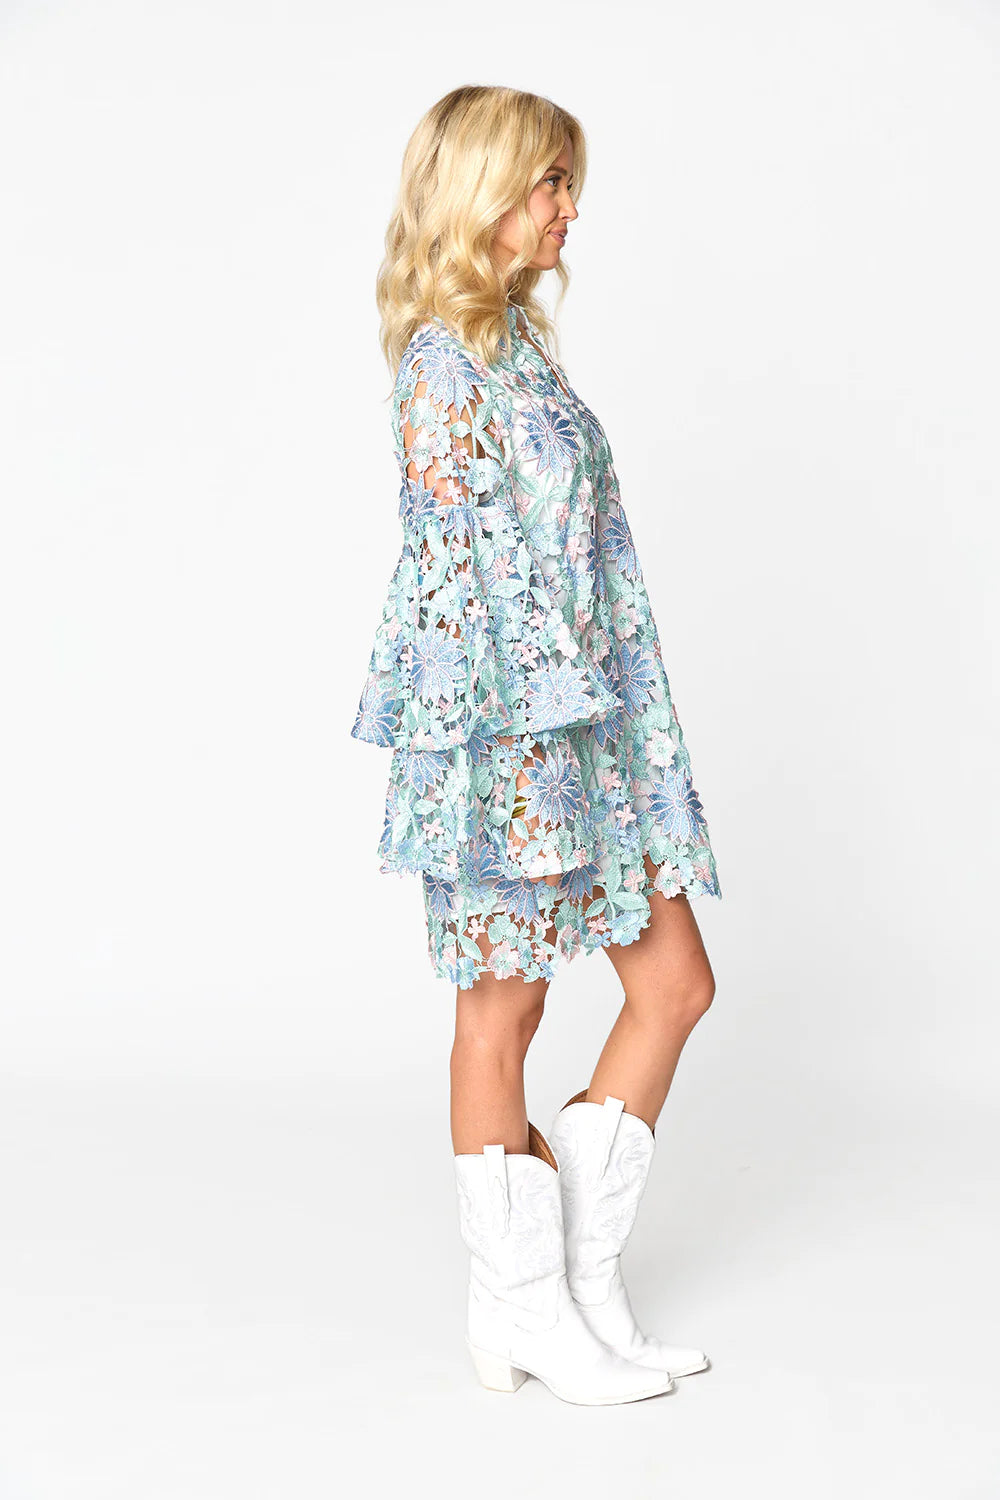 BuddyLove Gayle Long Sleeve Mini Dress in Bellflower